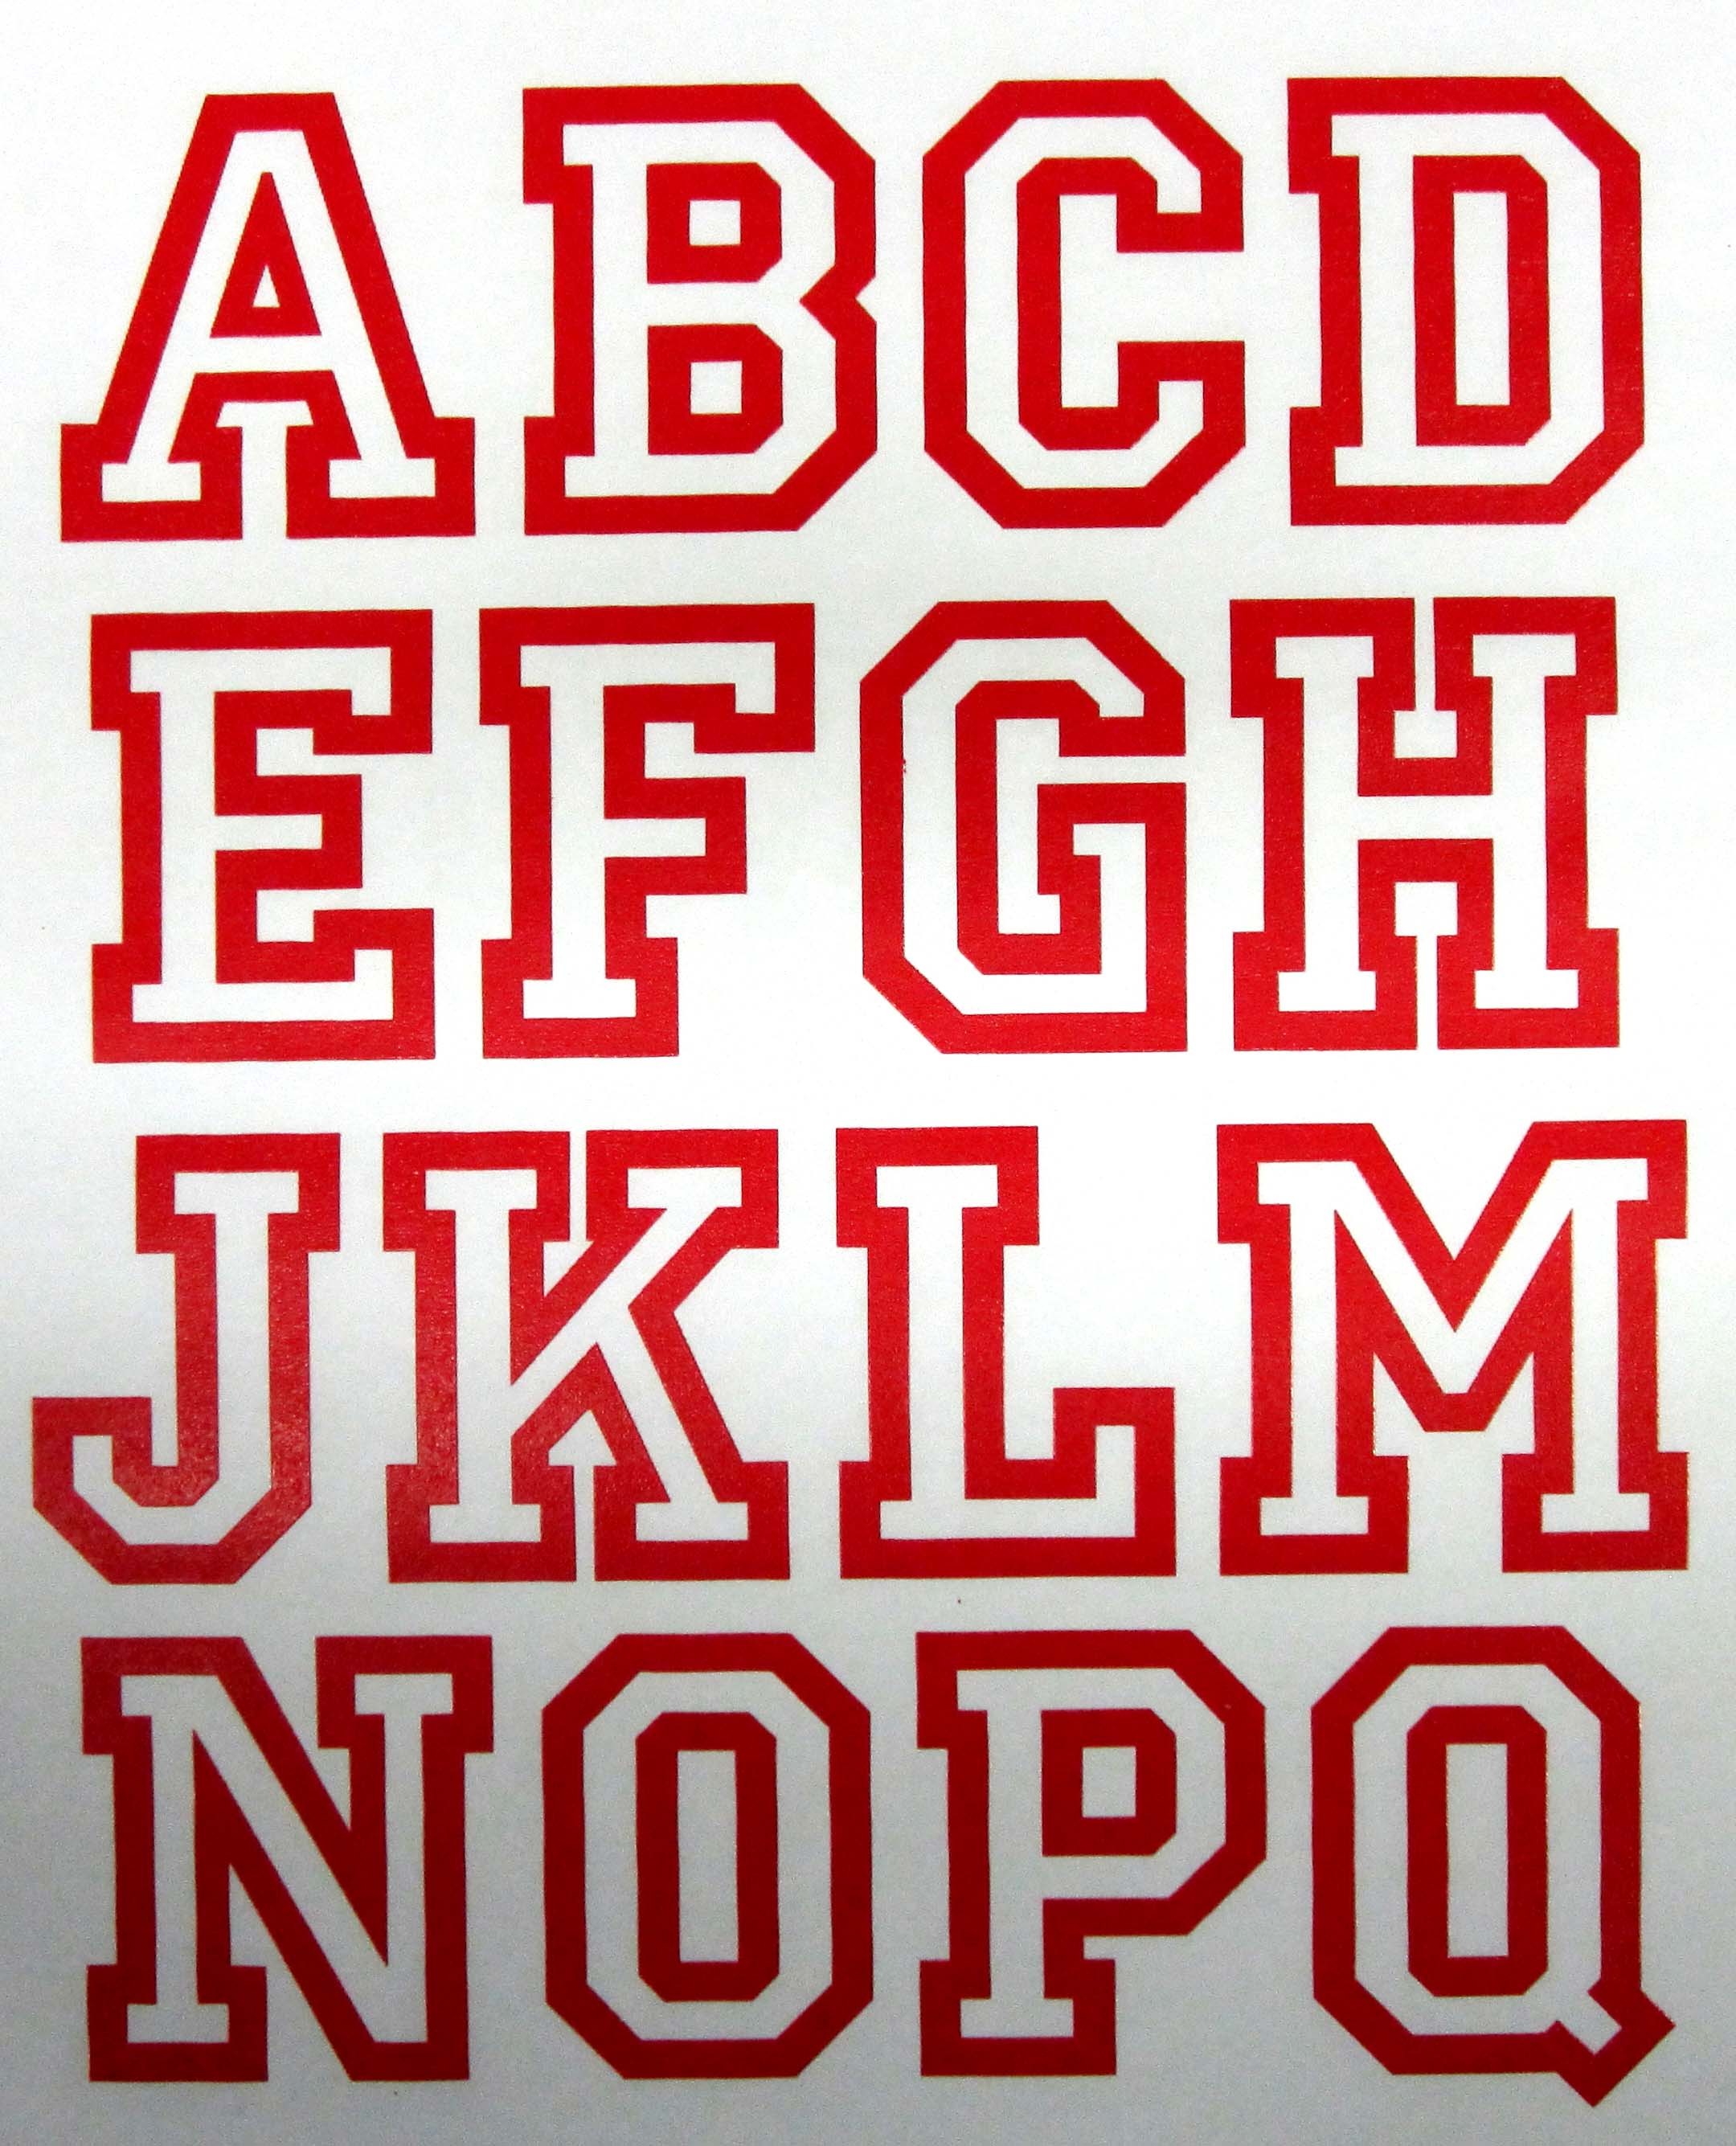 Jersey number font